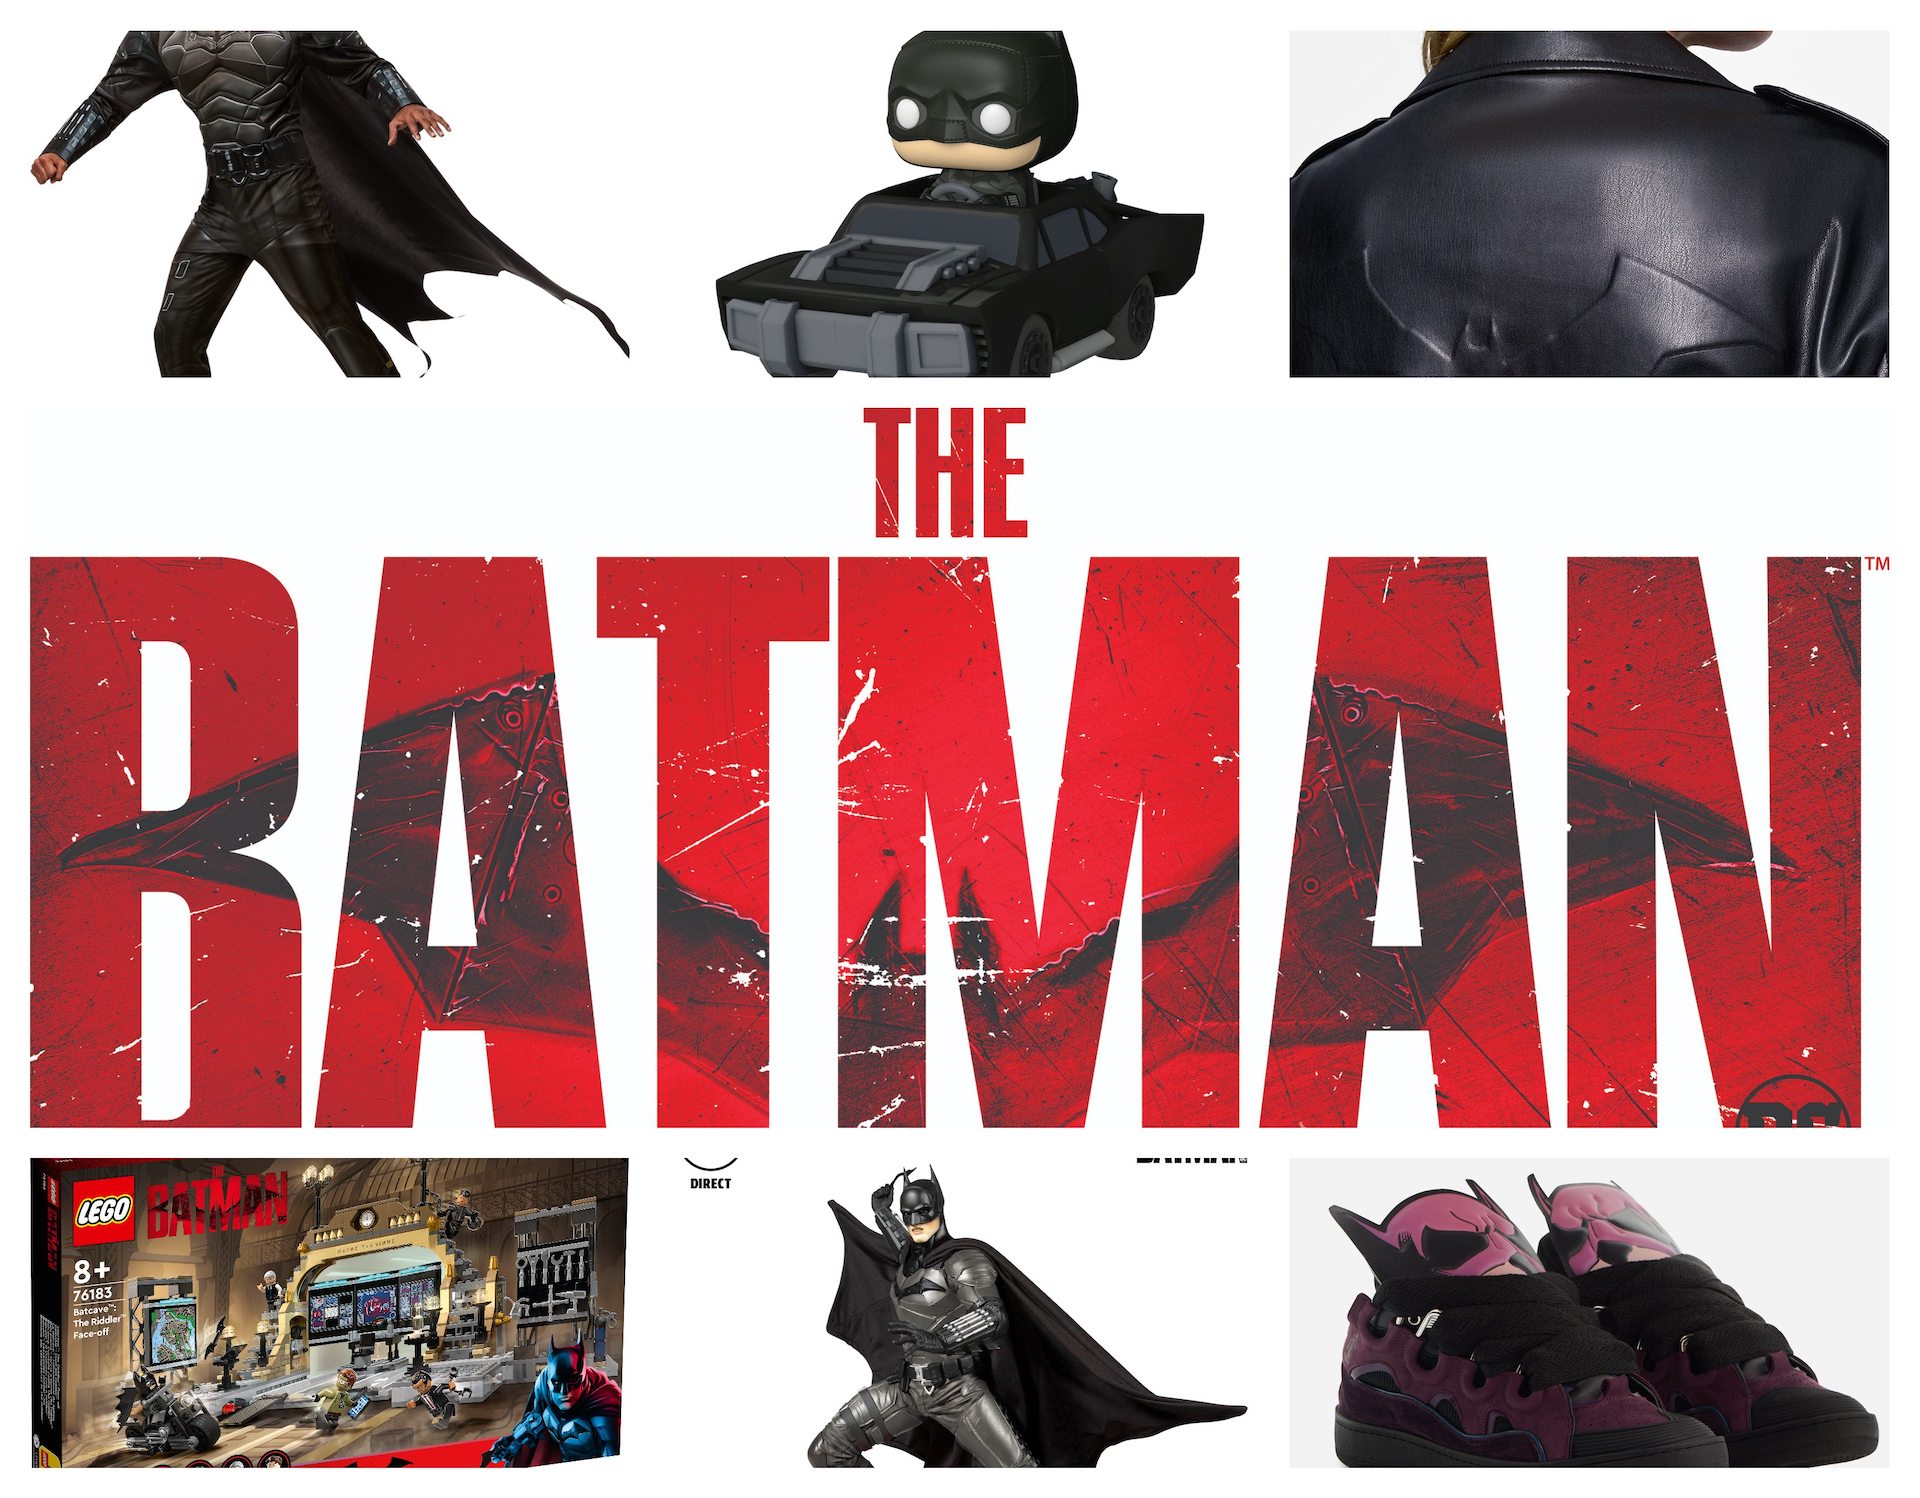 WarnerMedia previews entire 'The Batman' merchandise plans for 2022